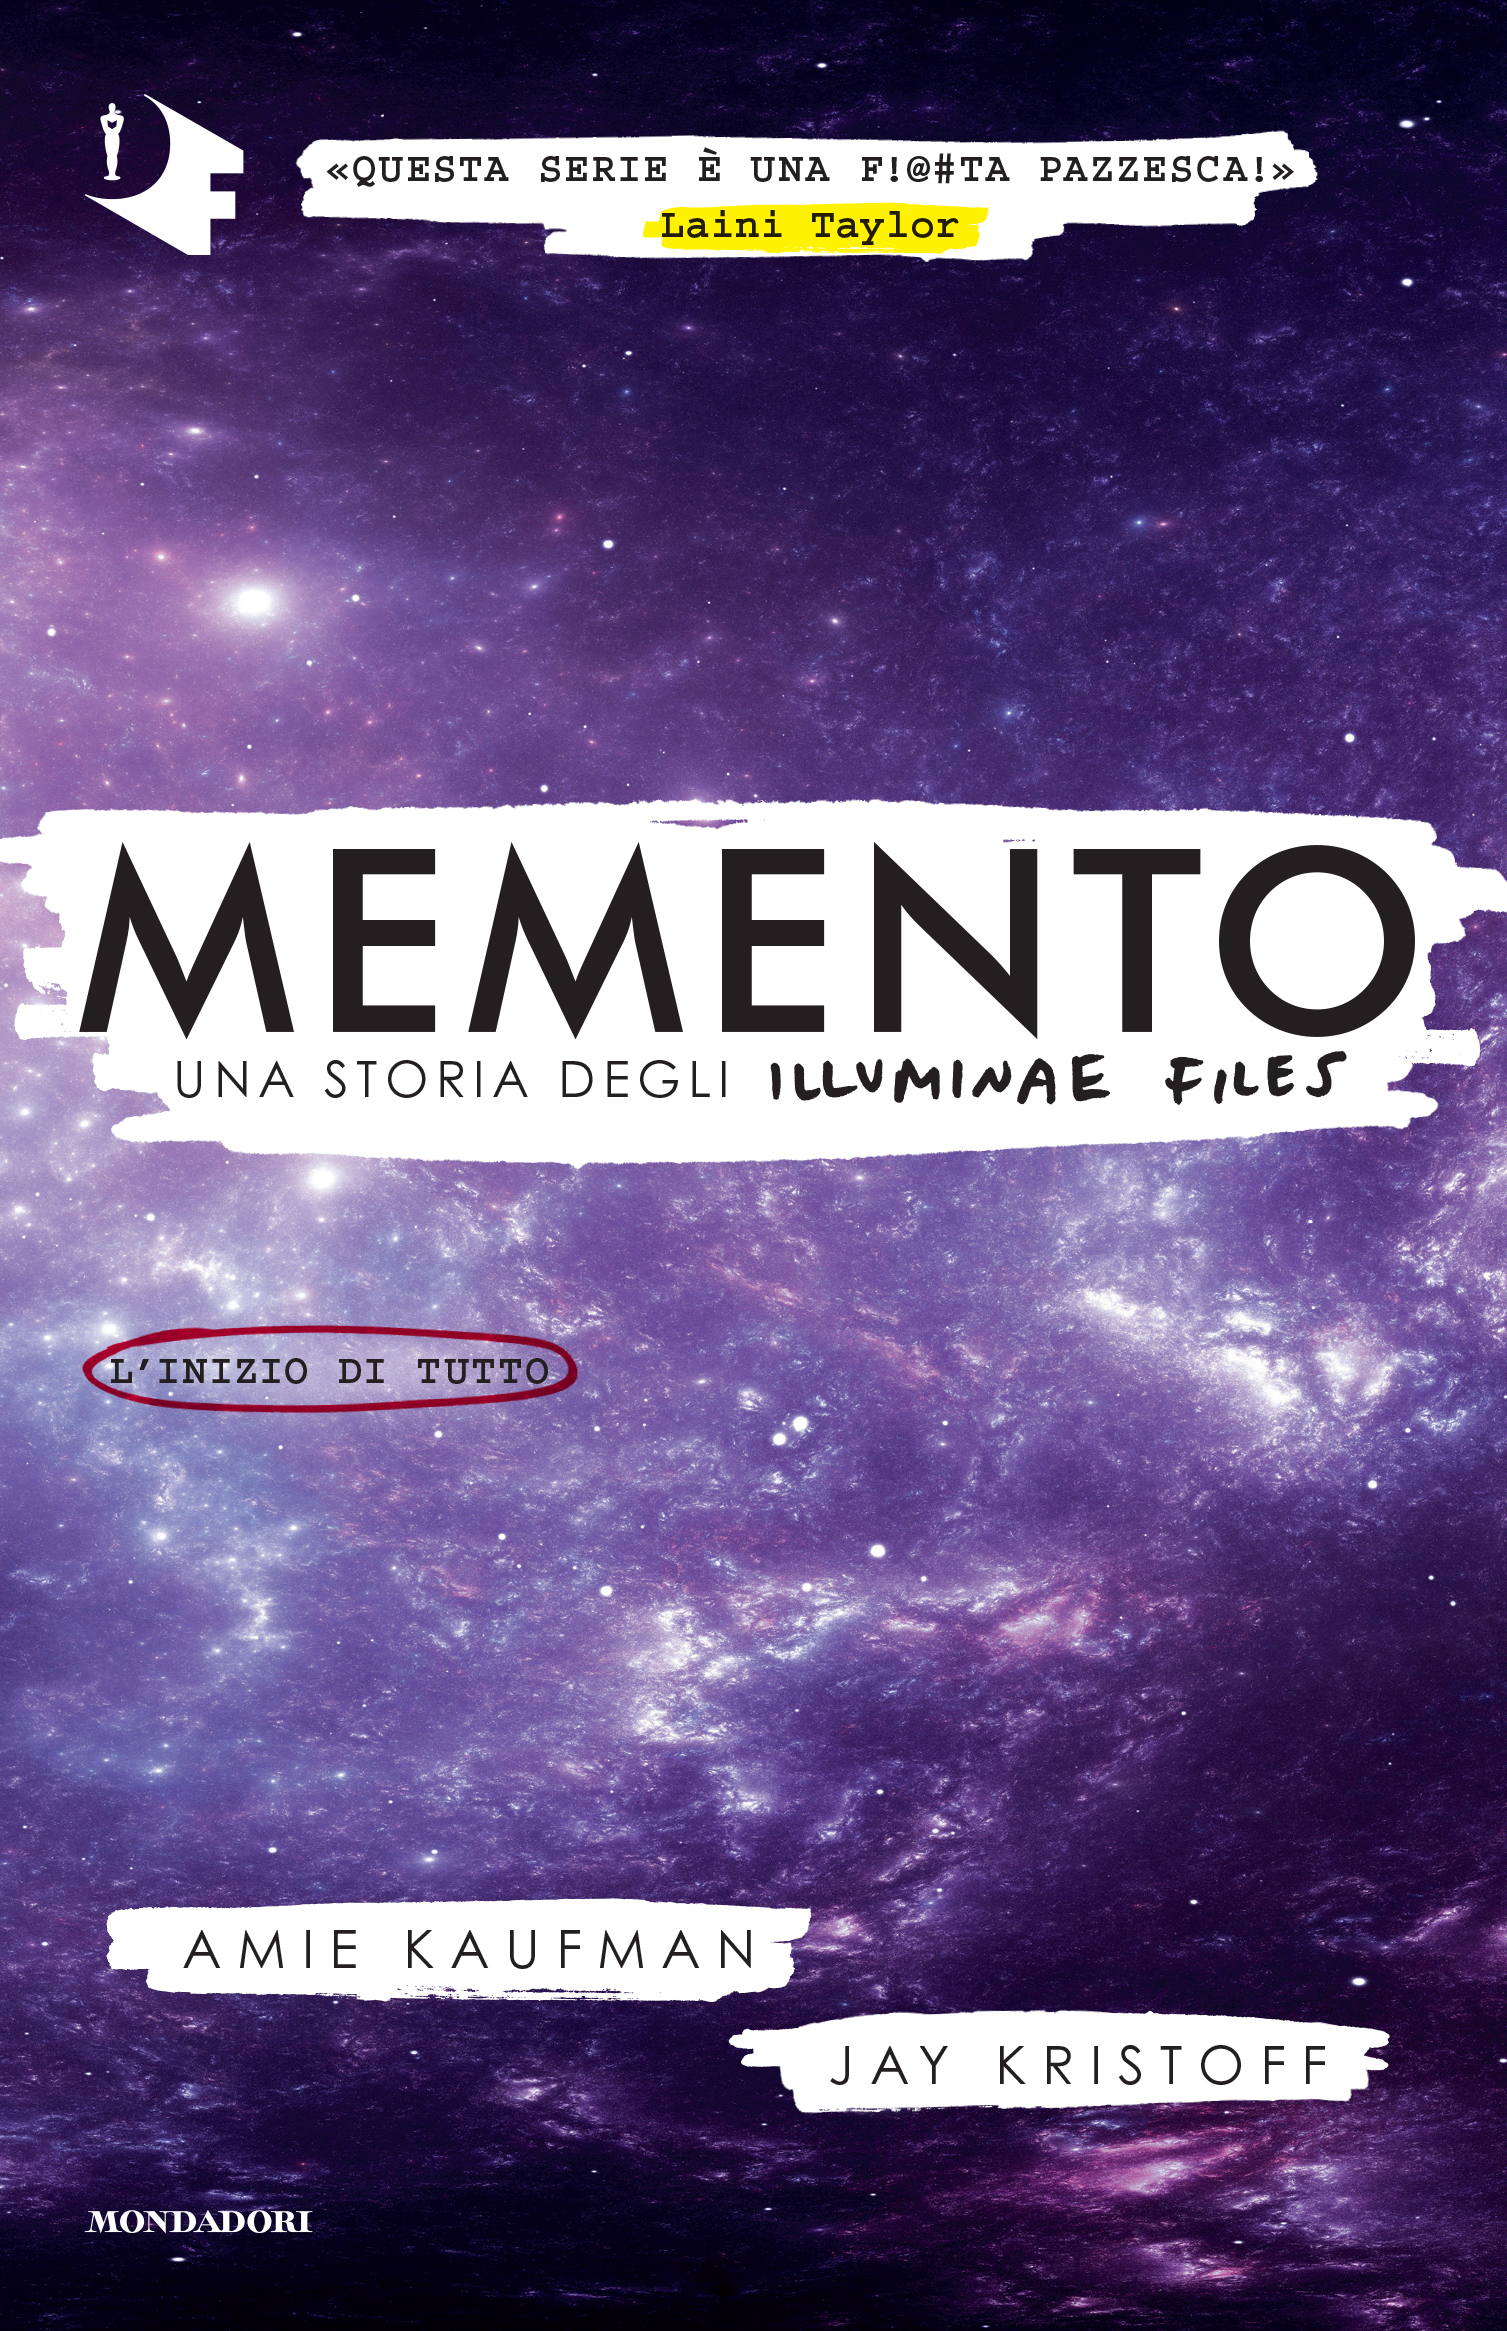 Memento (Italiano language)